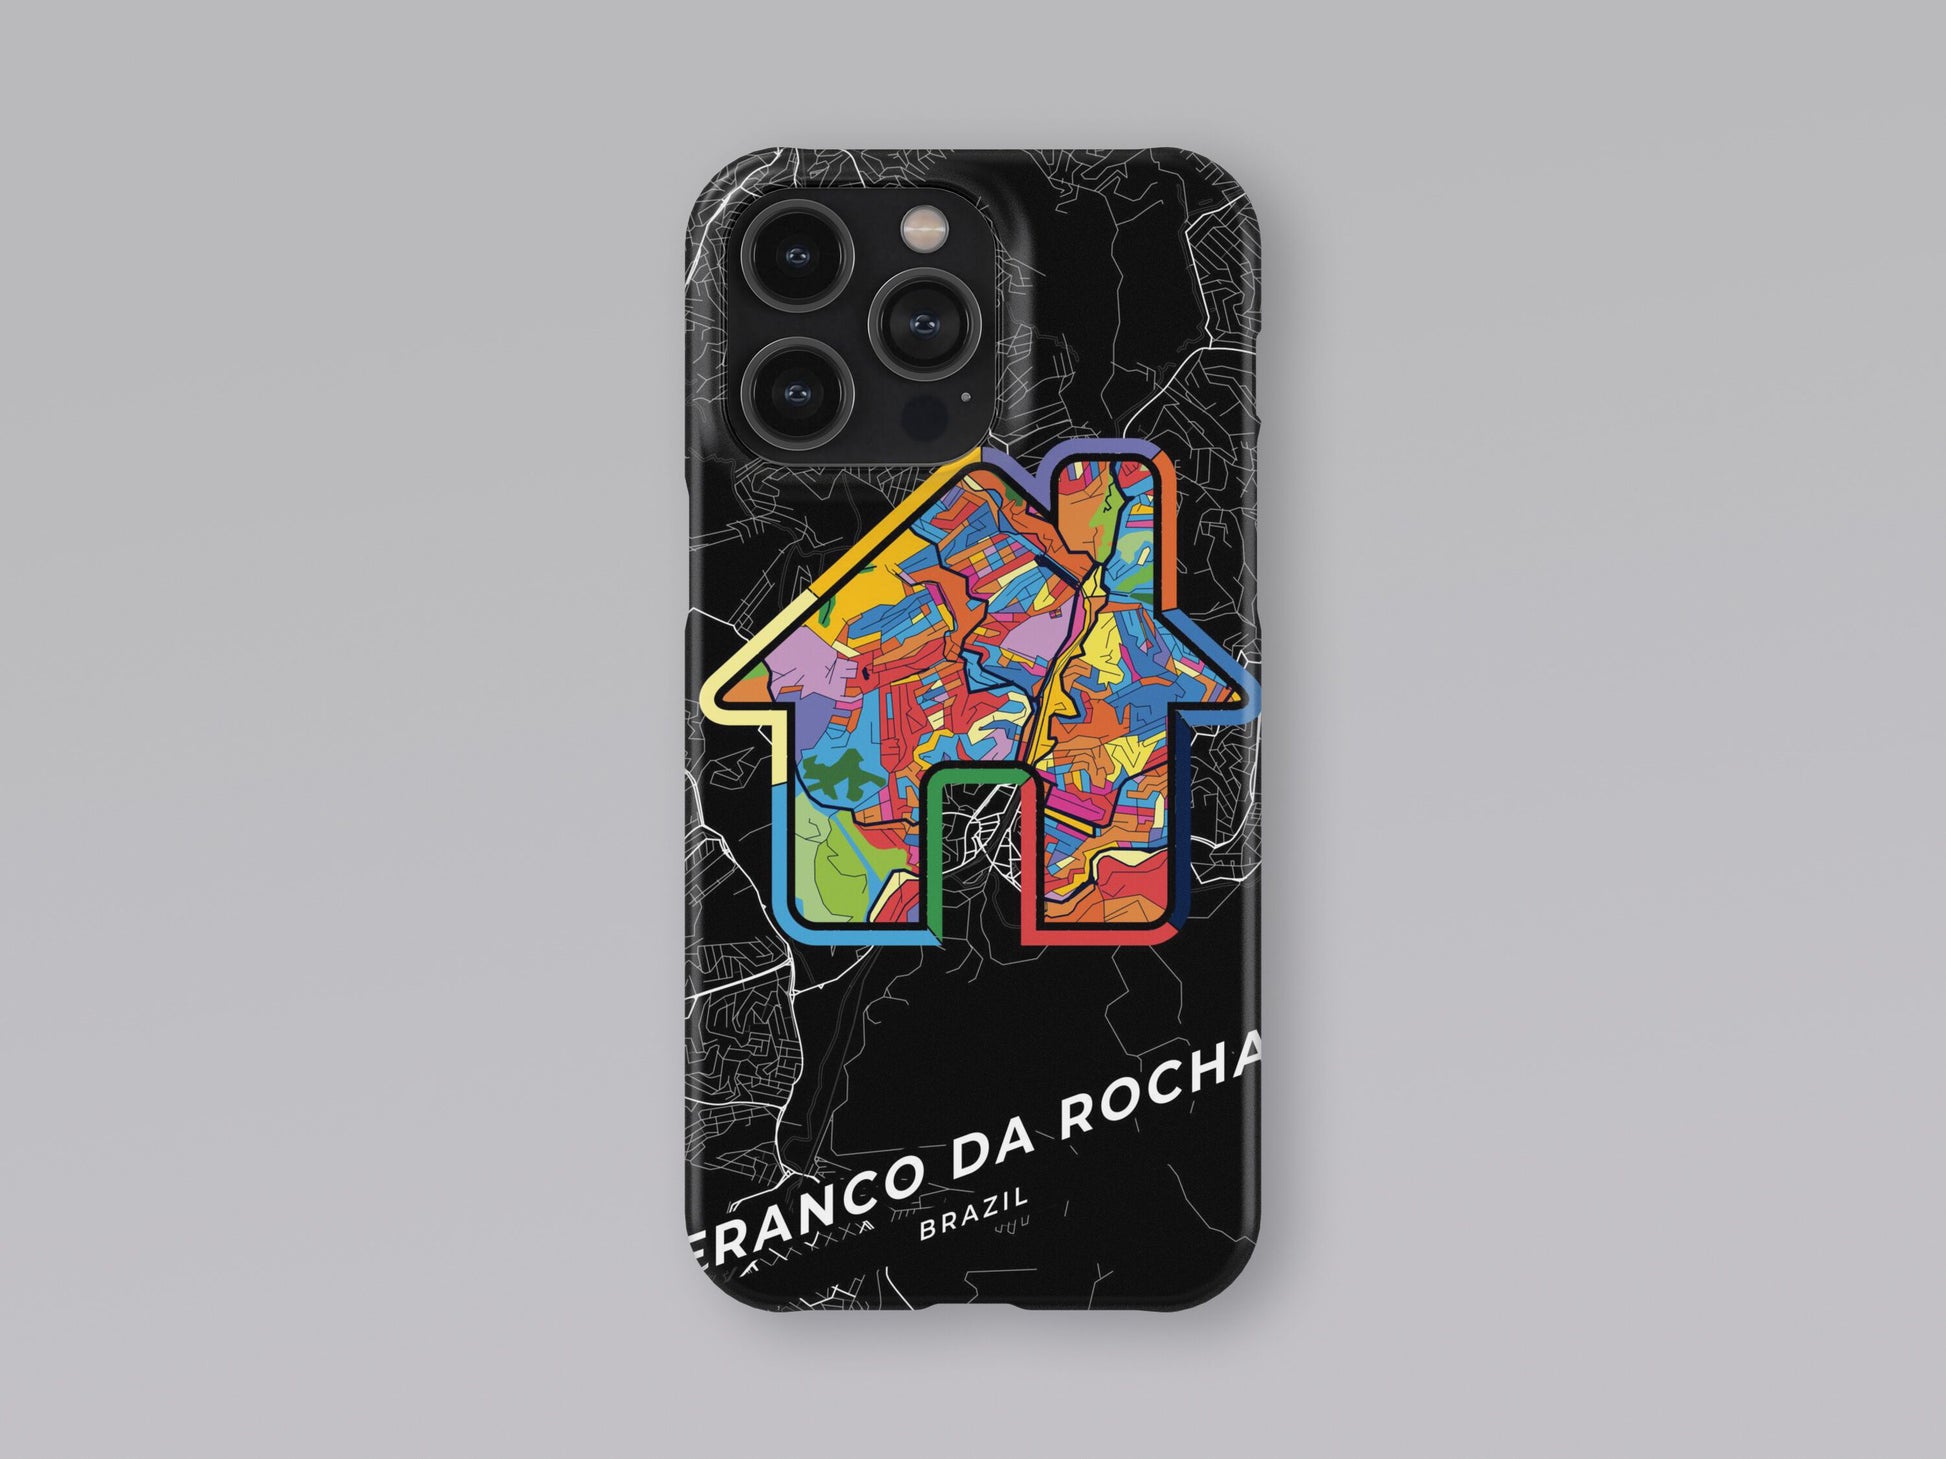 Franco Da Rocha Brazil slim phone case with colorful icon. Birthday, wedding or housewarming gift. Couple match cases. 3